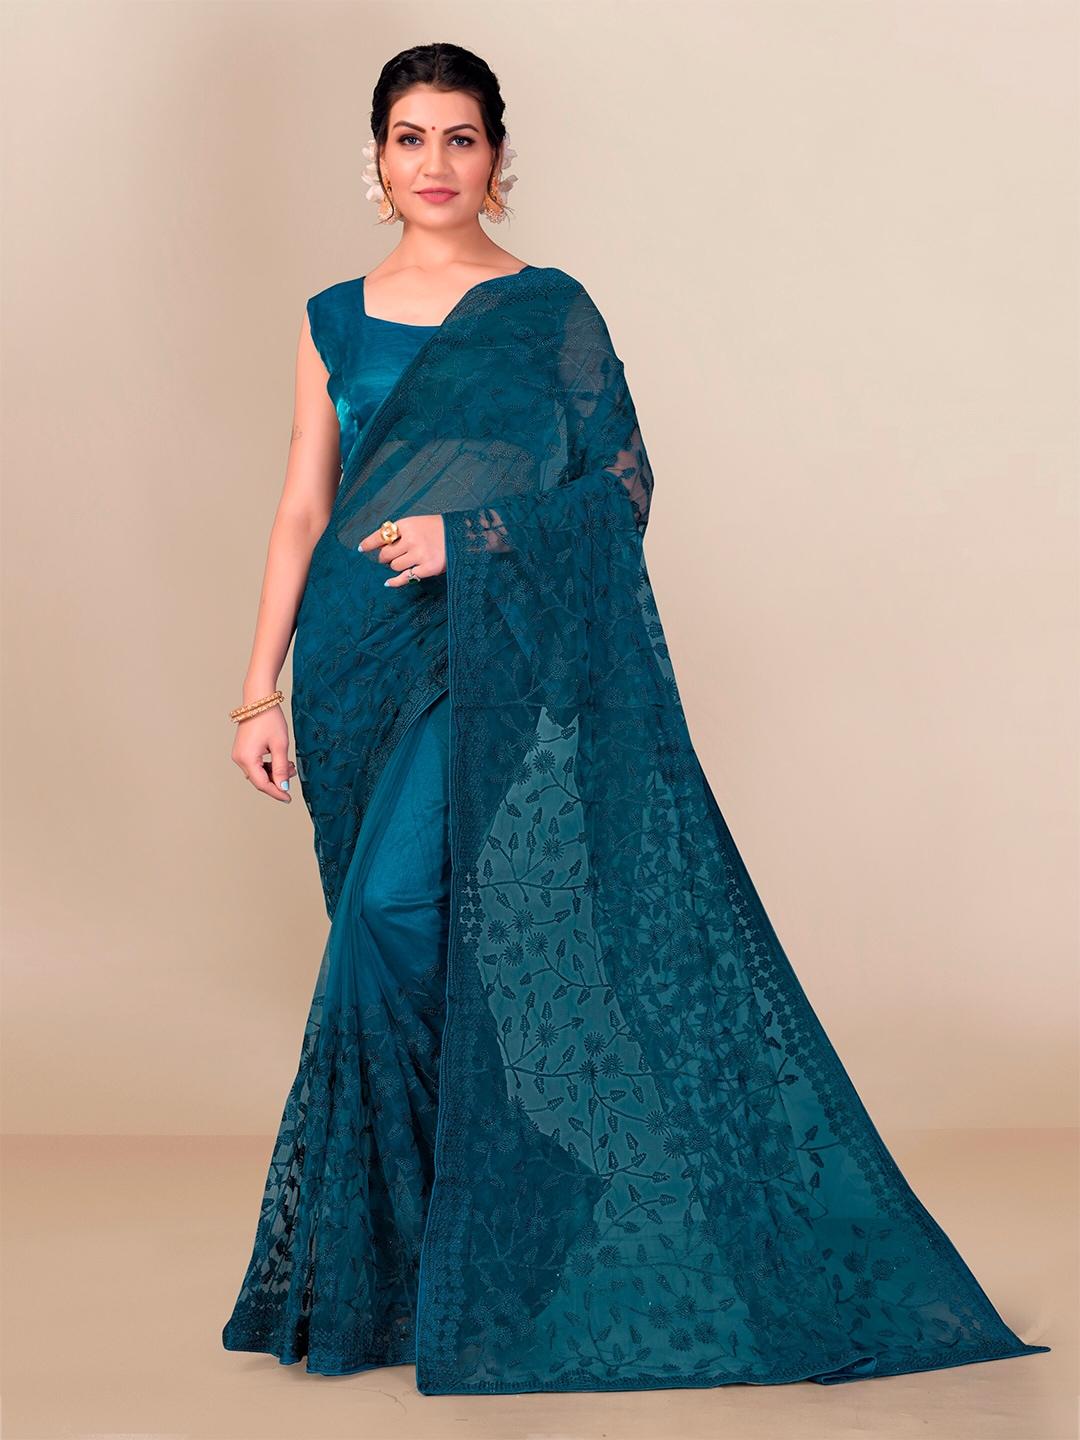 vairagee-navy-blue-floral-embroidered-net-saree